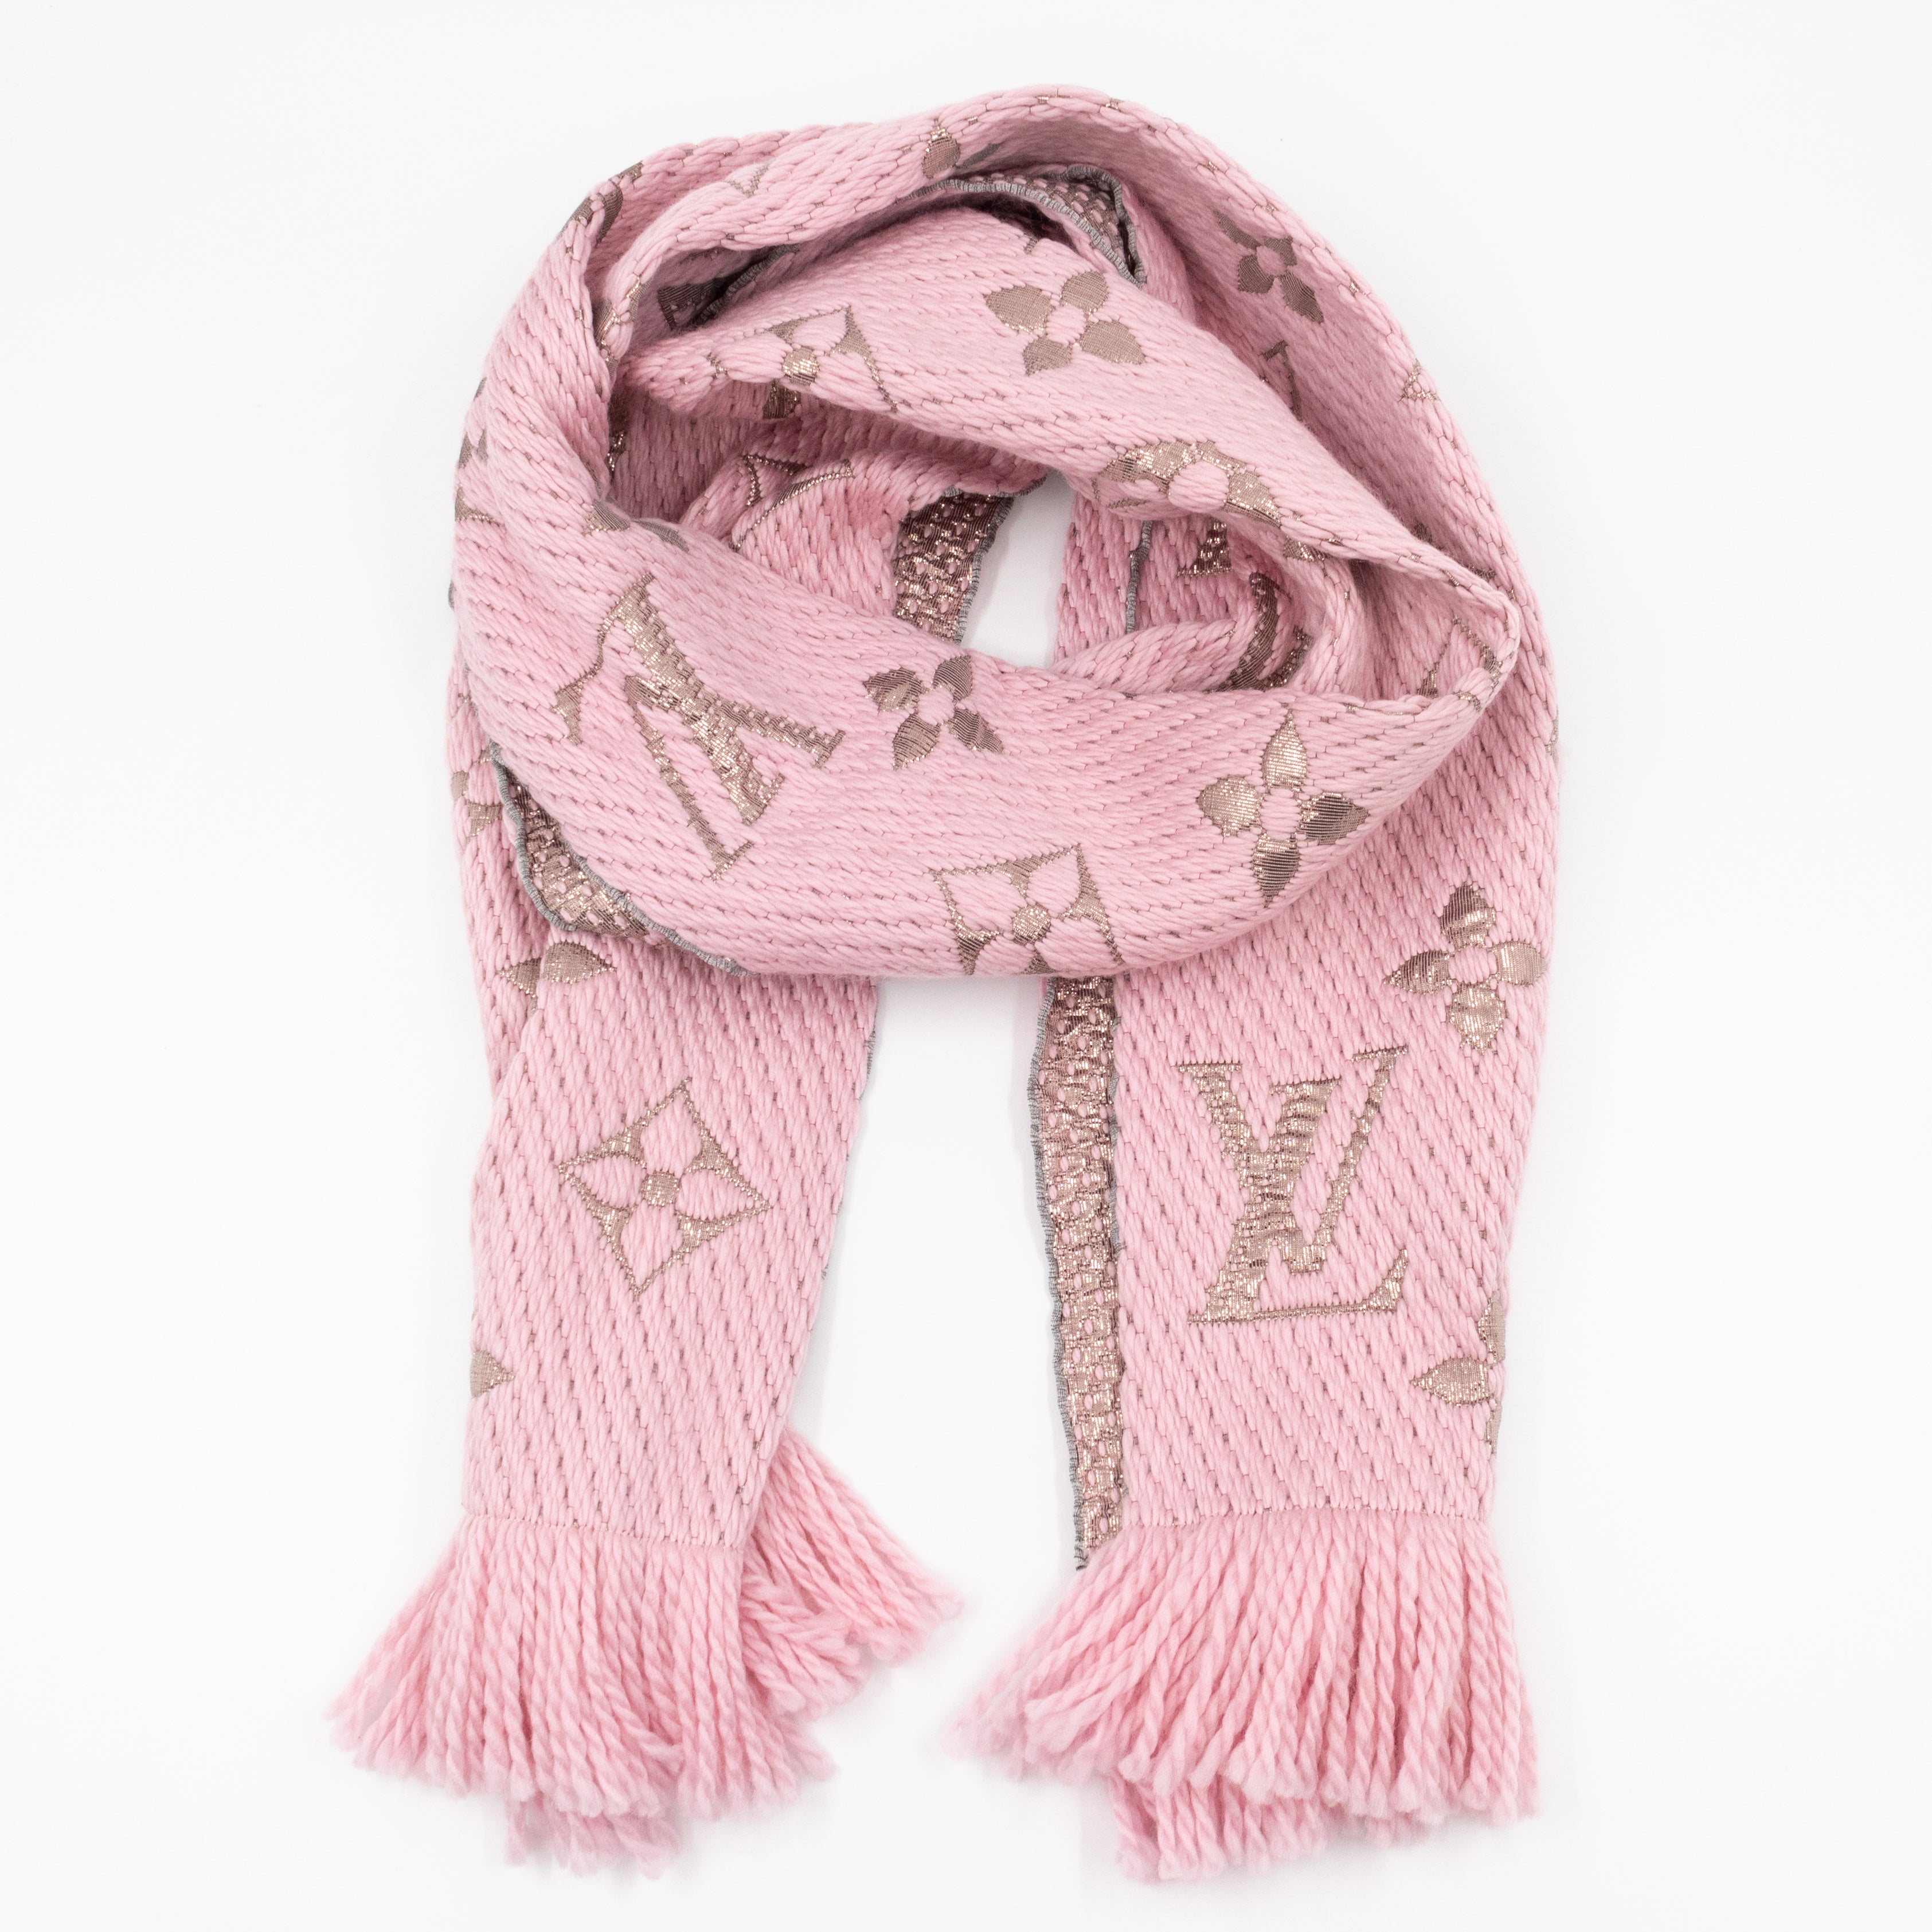 Louis Vuitton - LOUIS VUITTON logomania shine scarf in rose